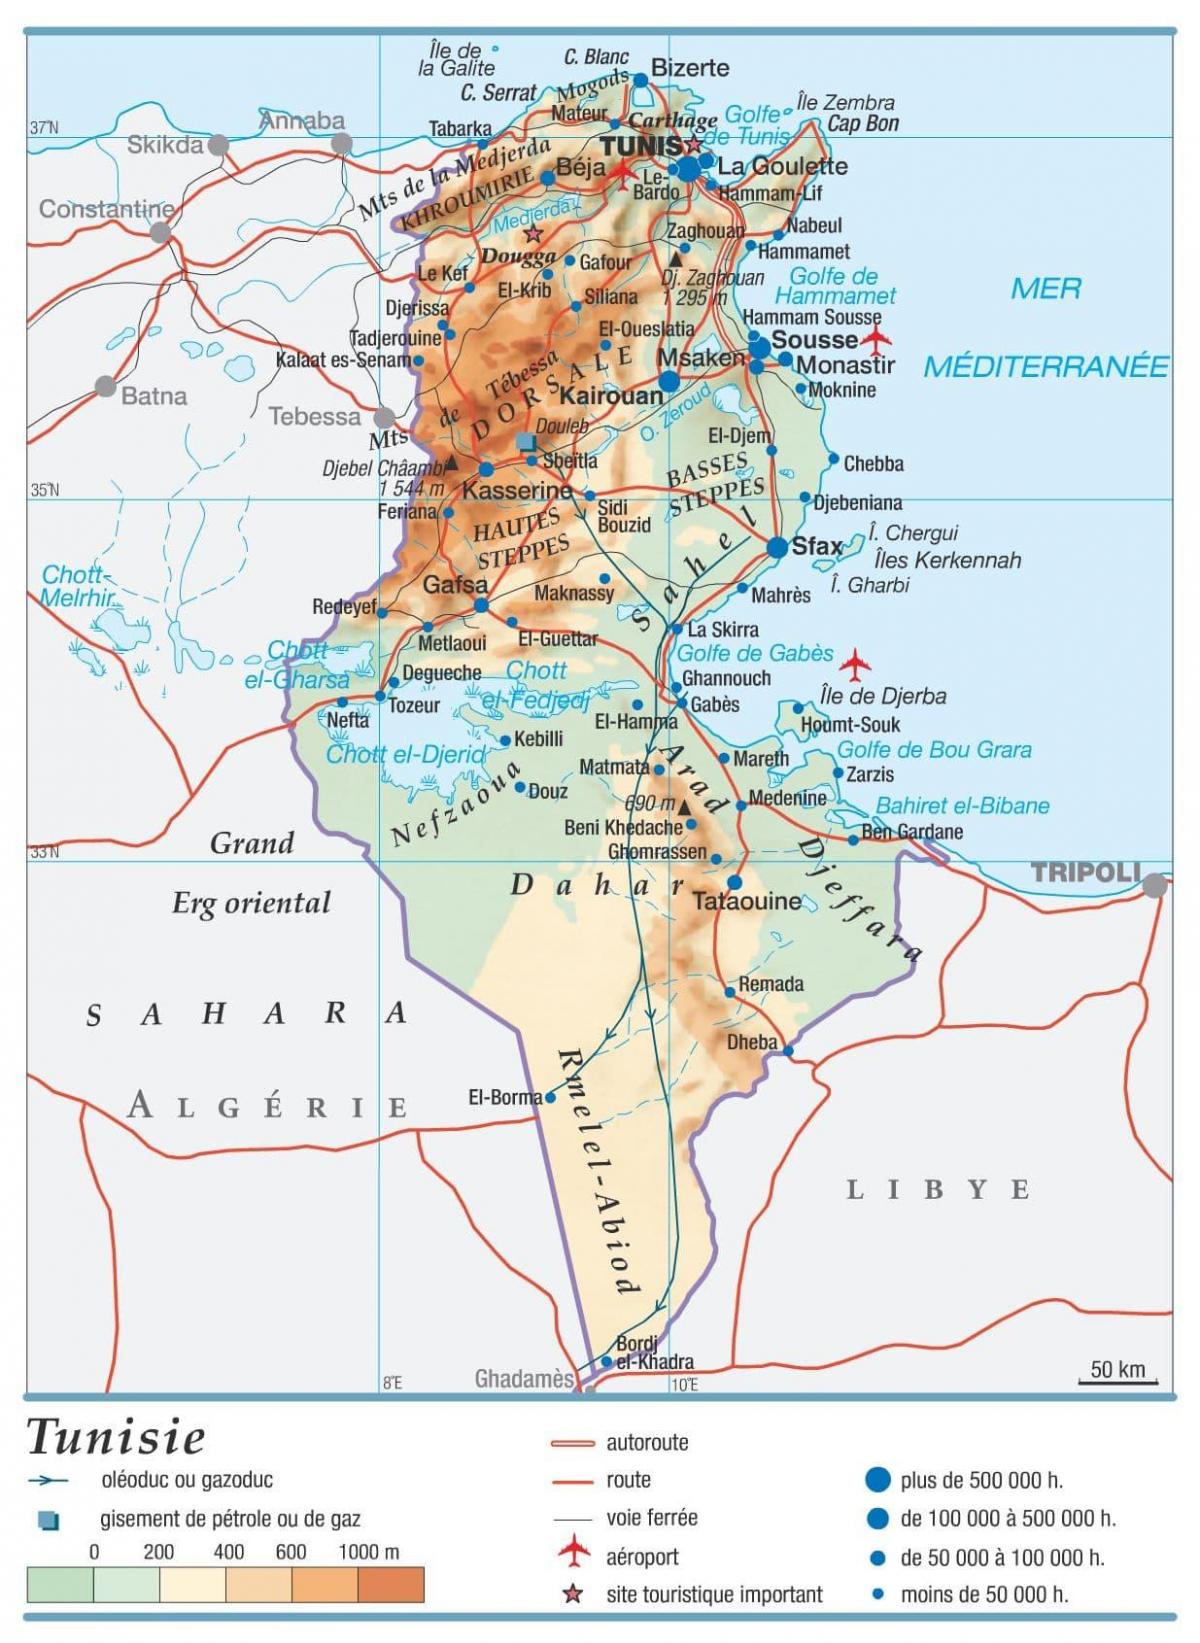 Mapa ukształtowania terenu Tunezji